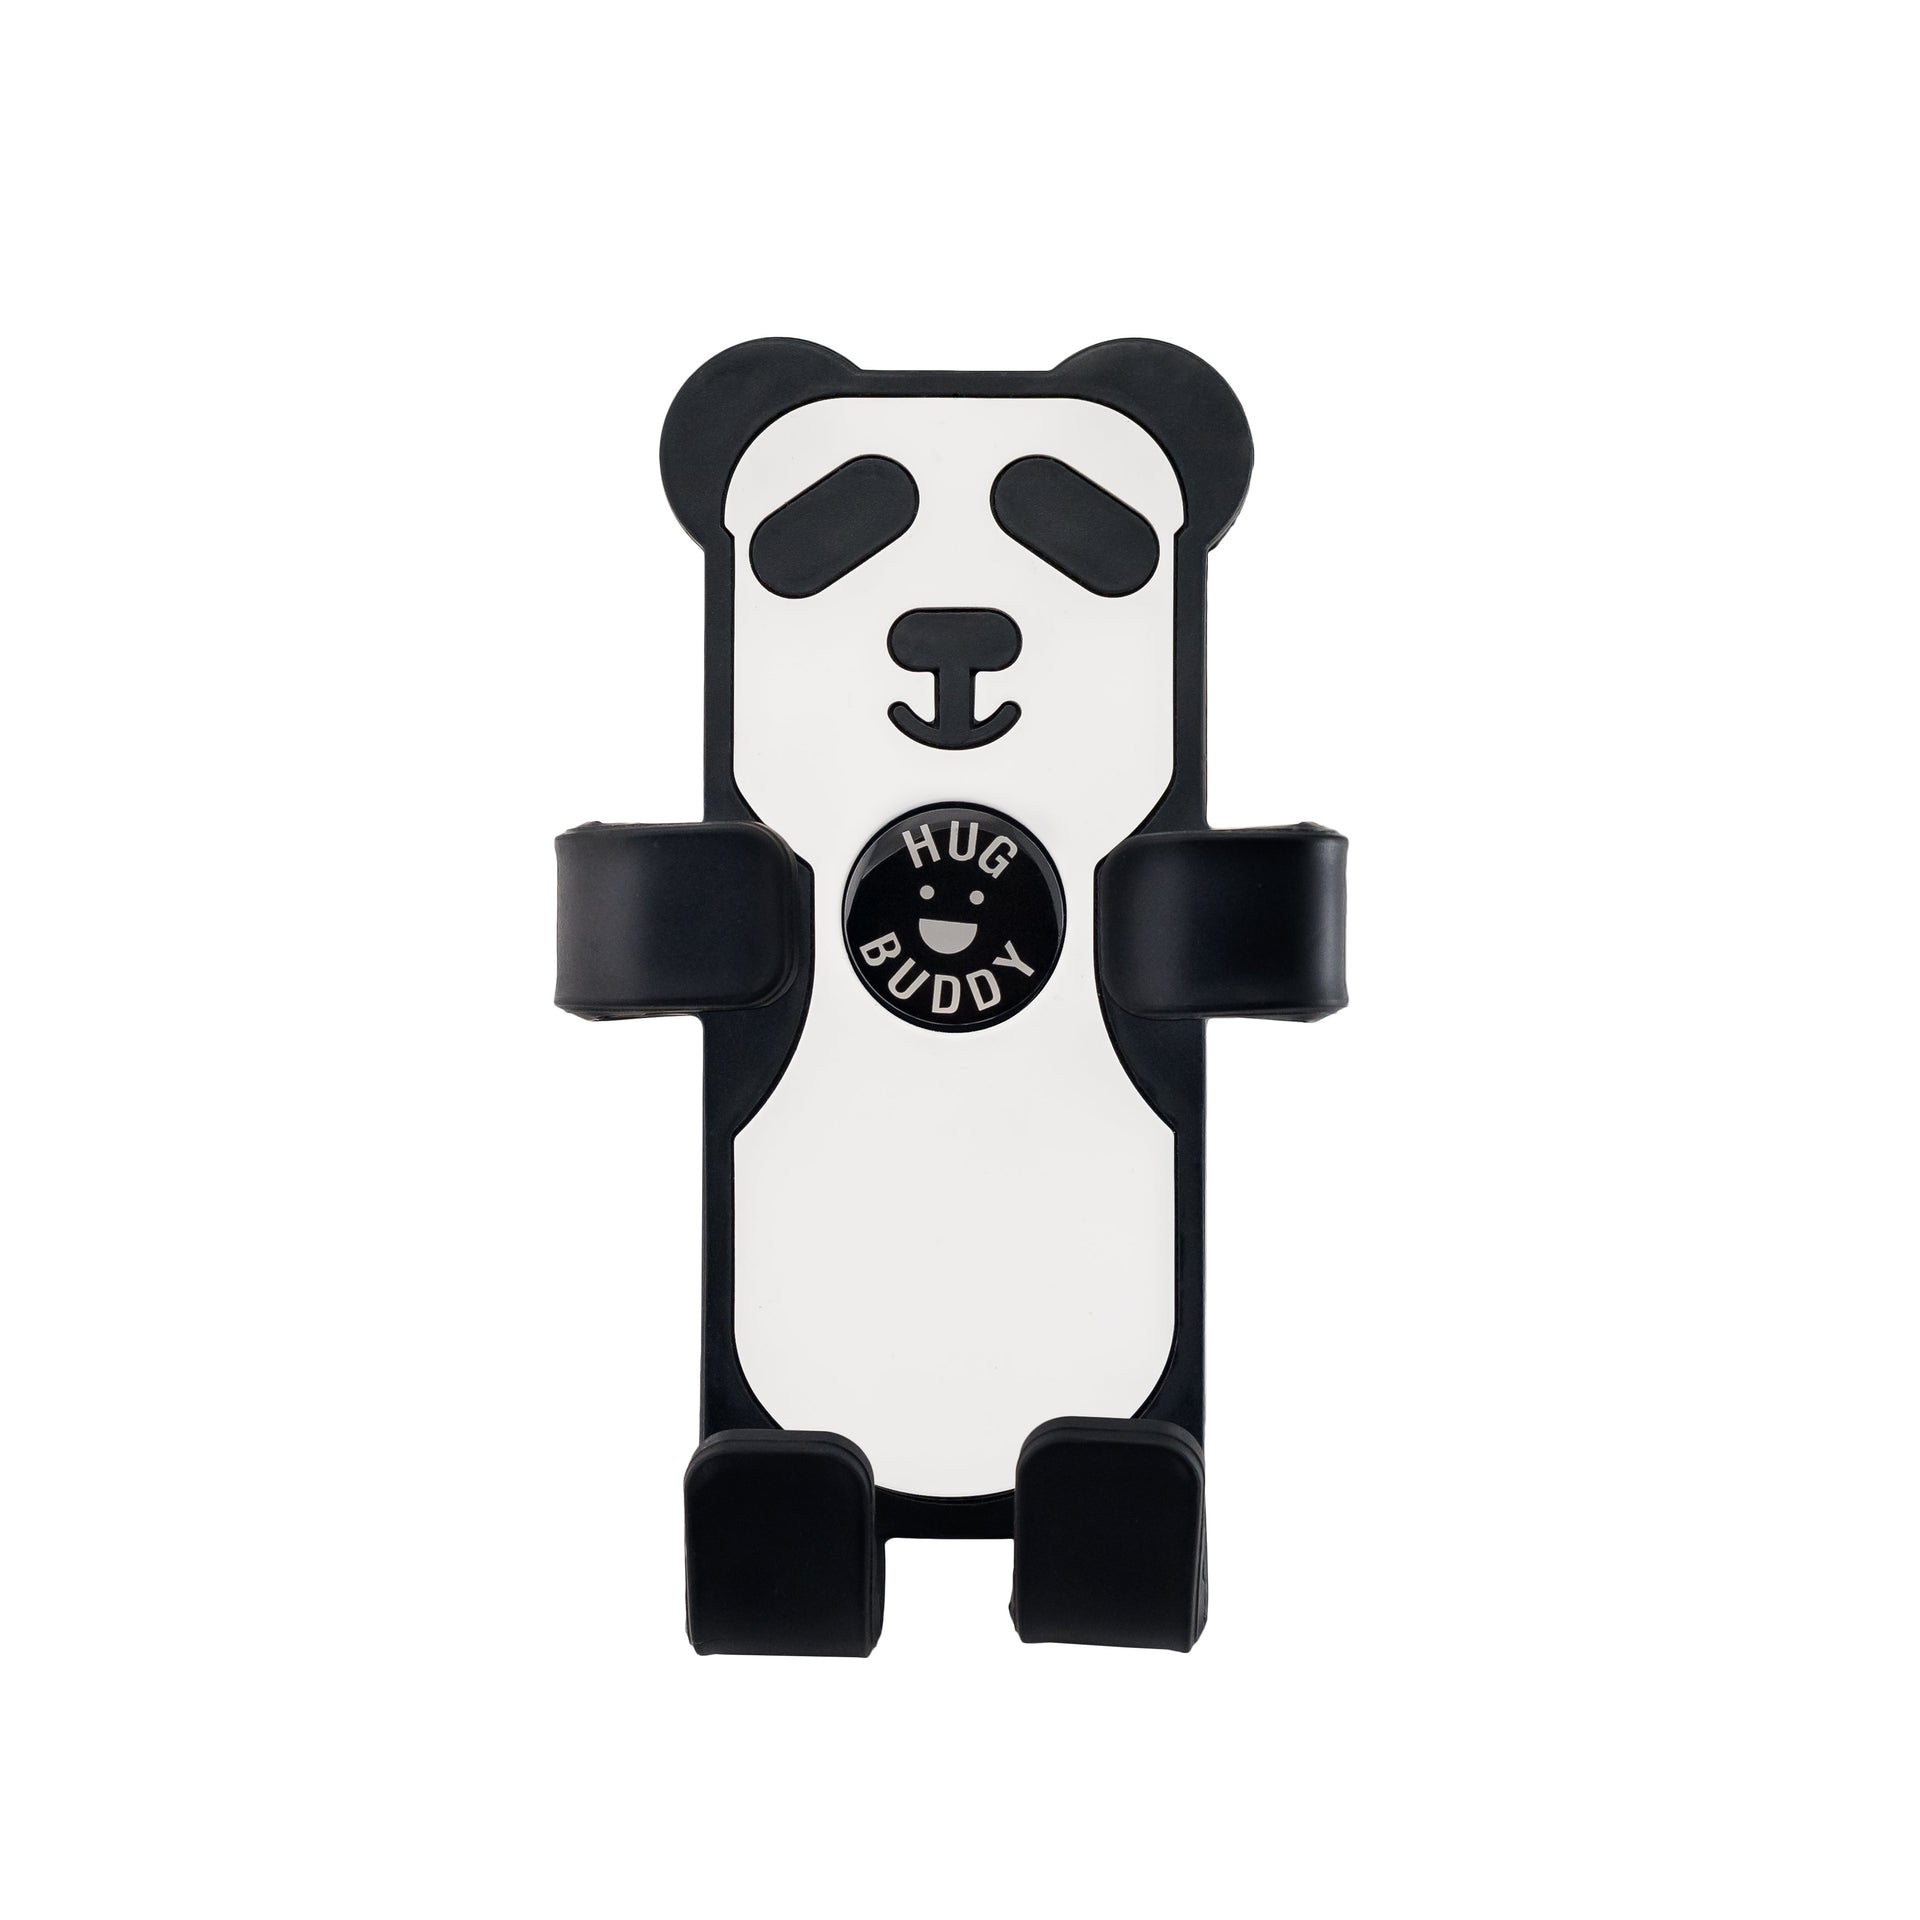 Panda Hug Buddy Phone Holder